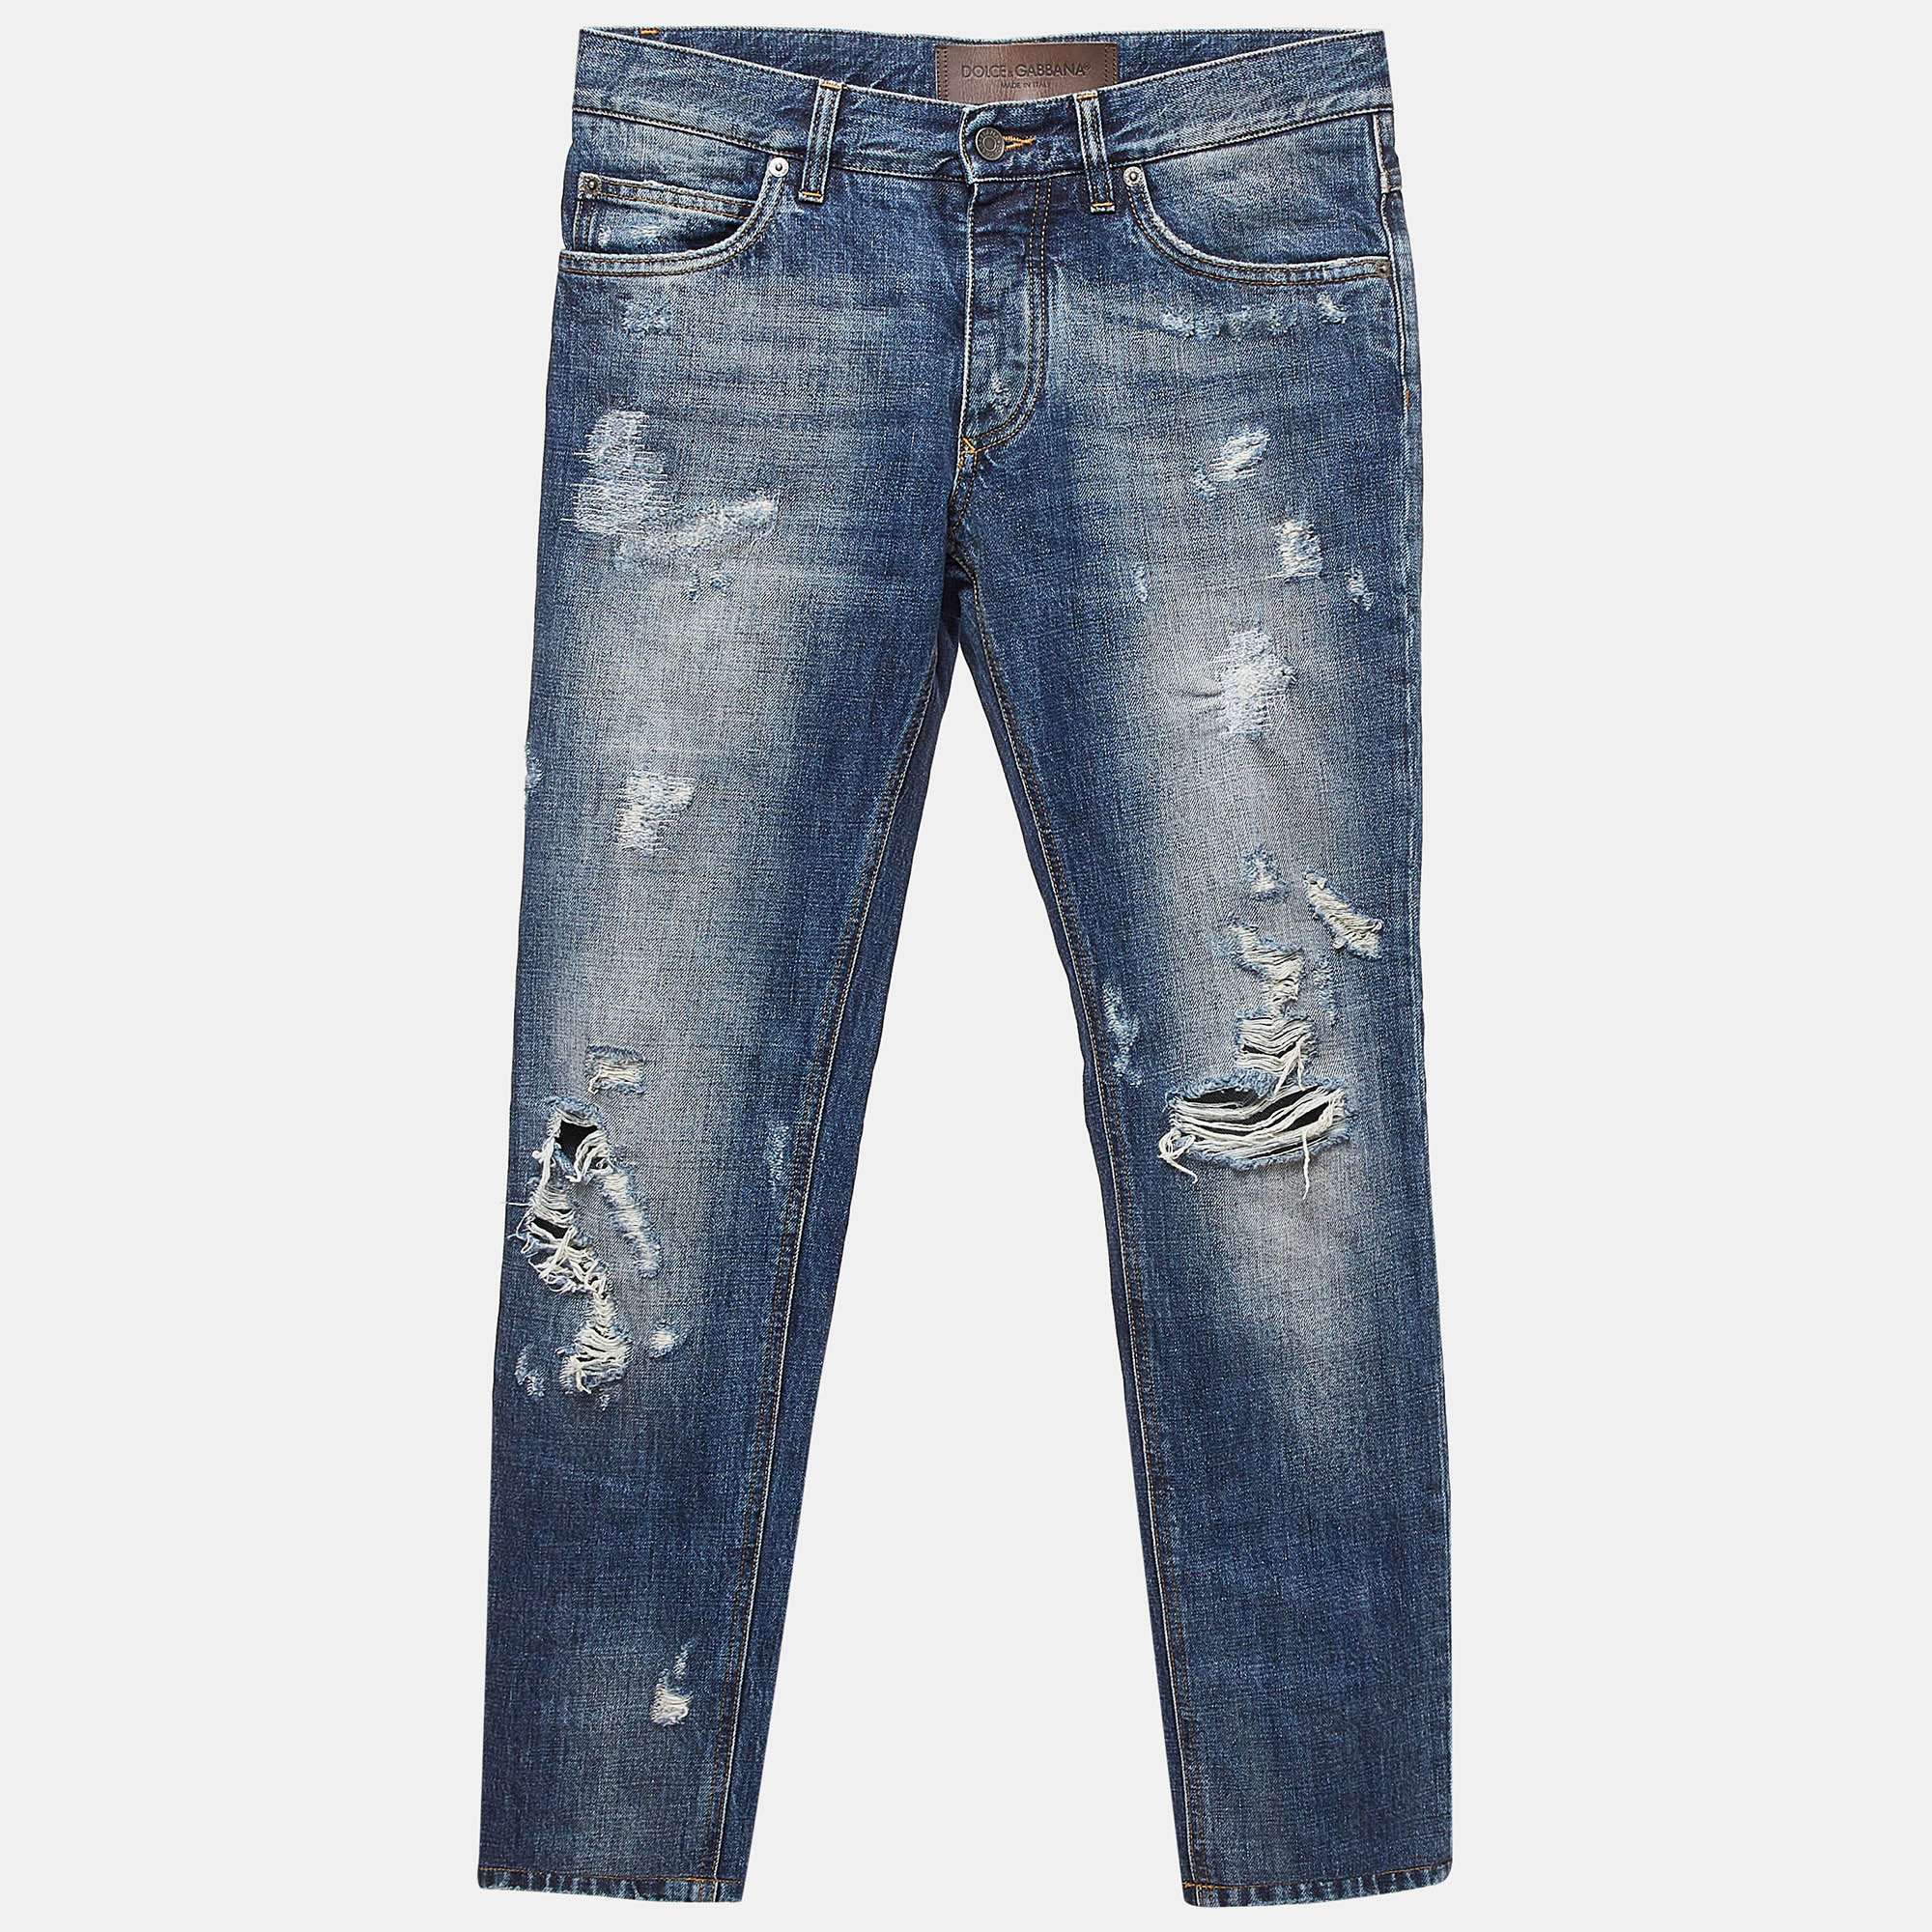 

Dolce & Gabbana Blue Distressed Denim Jeans S Waist 30"